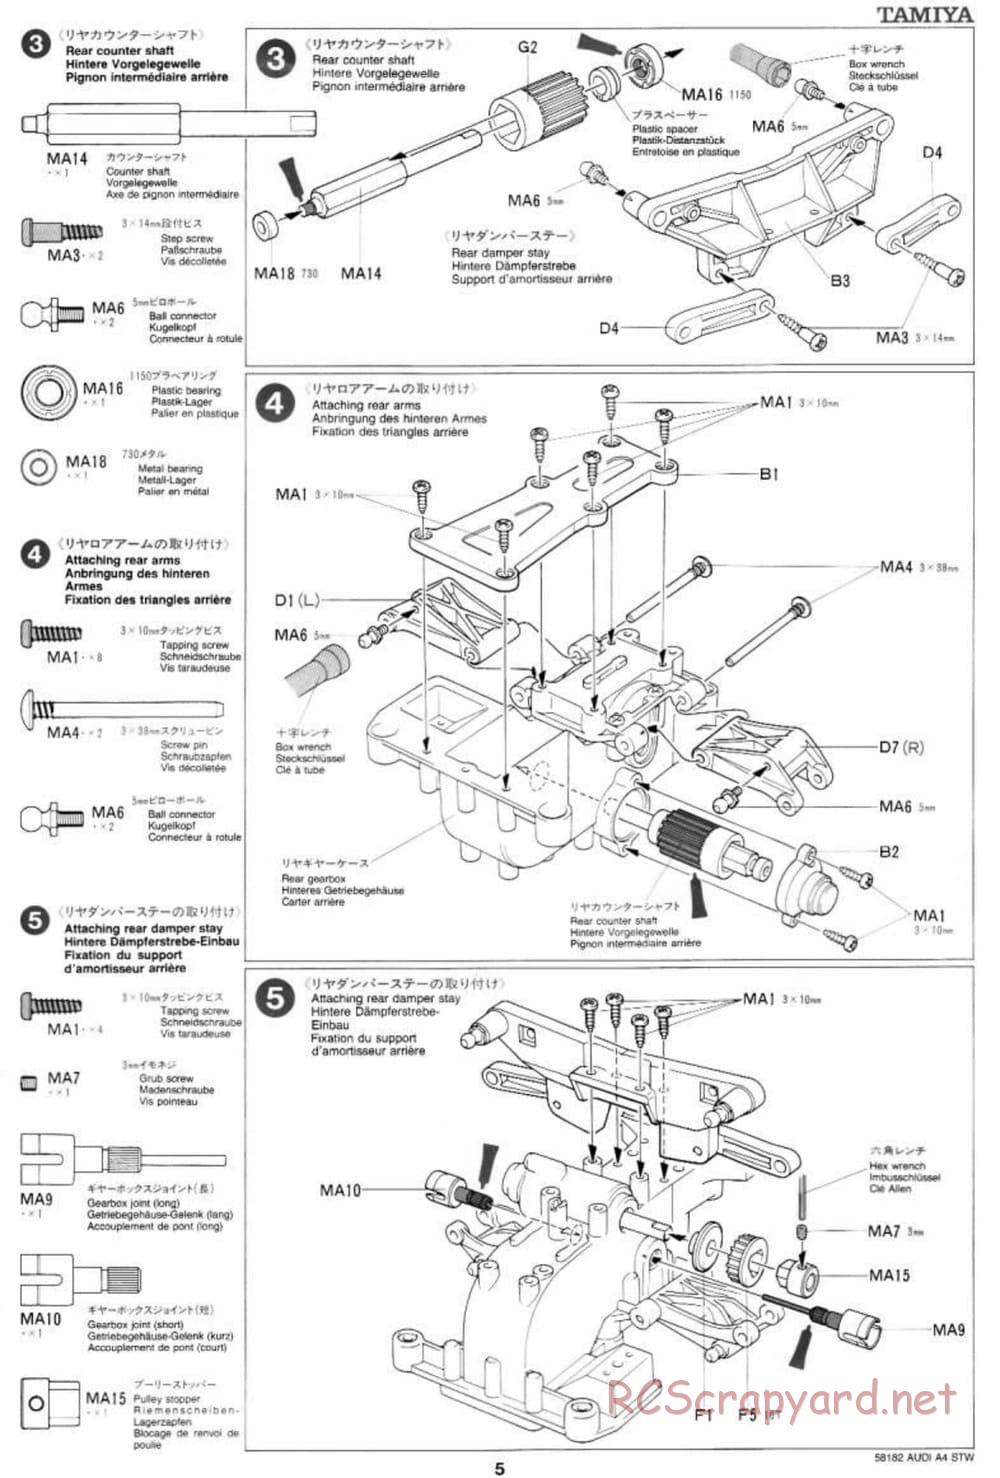 Tamiya - Audi A4 STW - TA-03F Chassis - Manual - Page 5